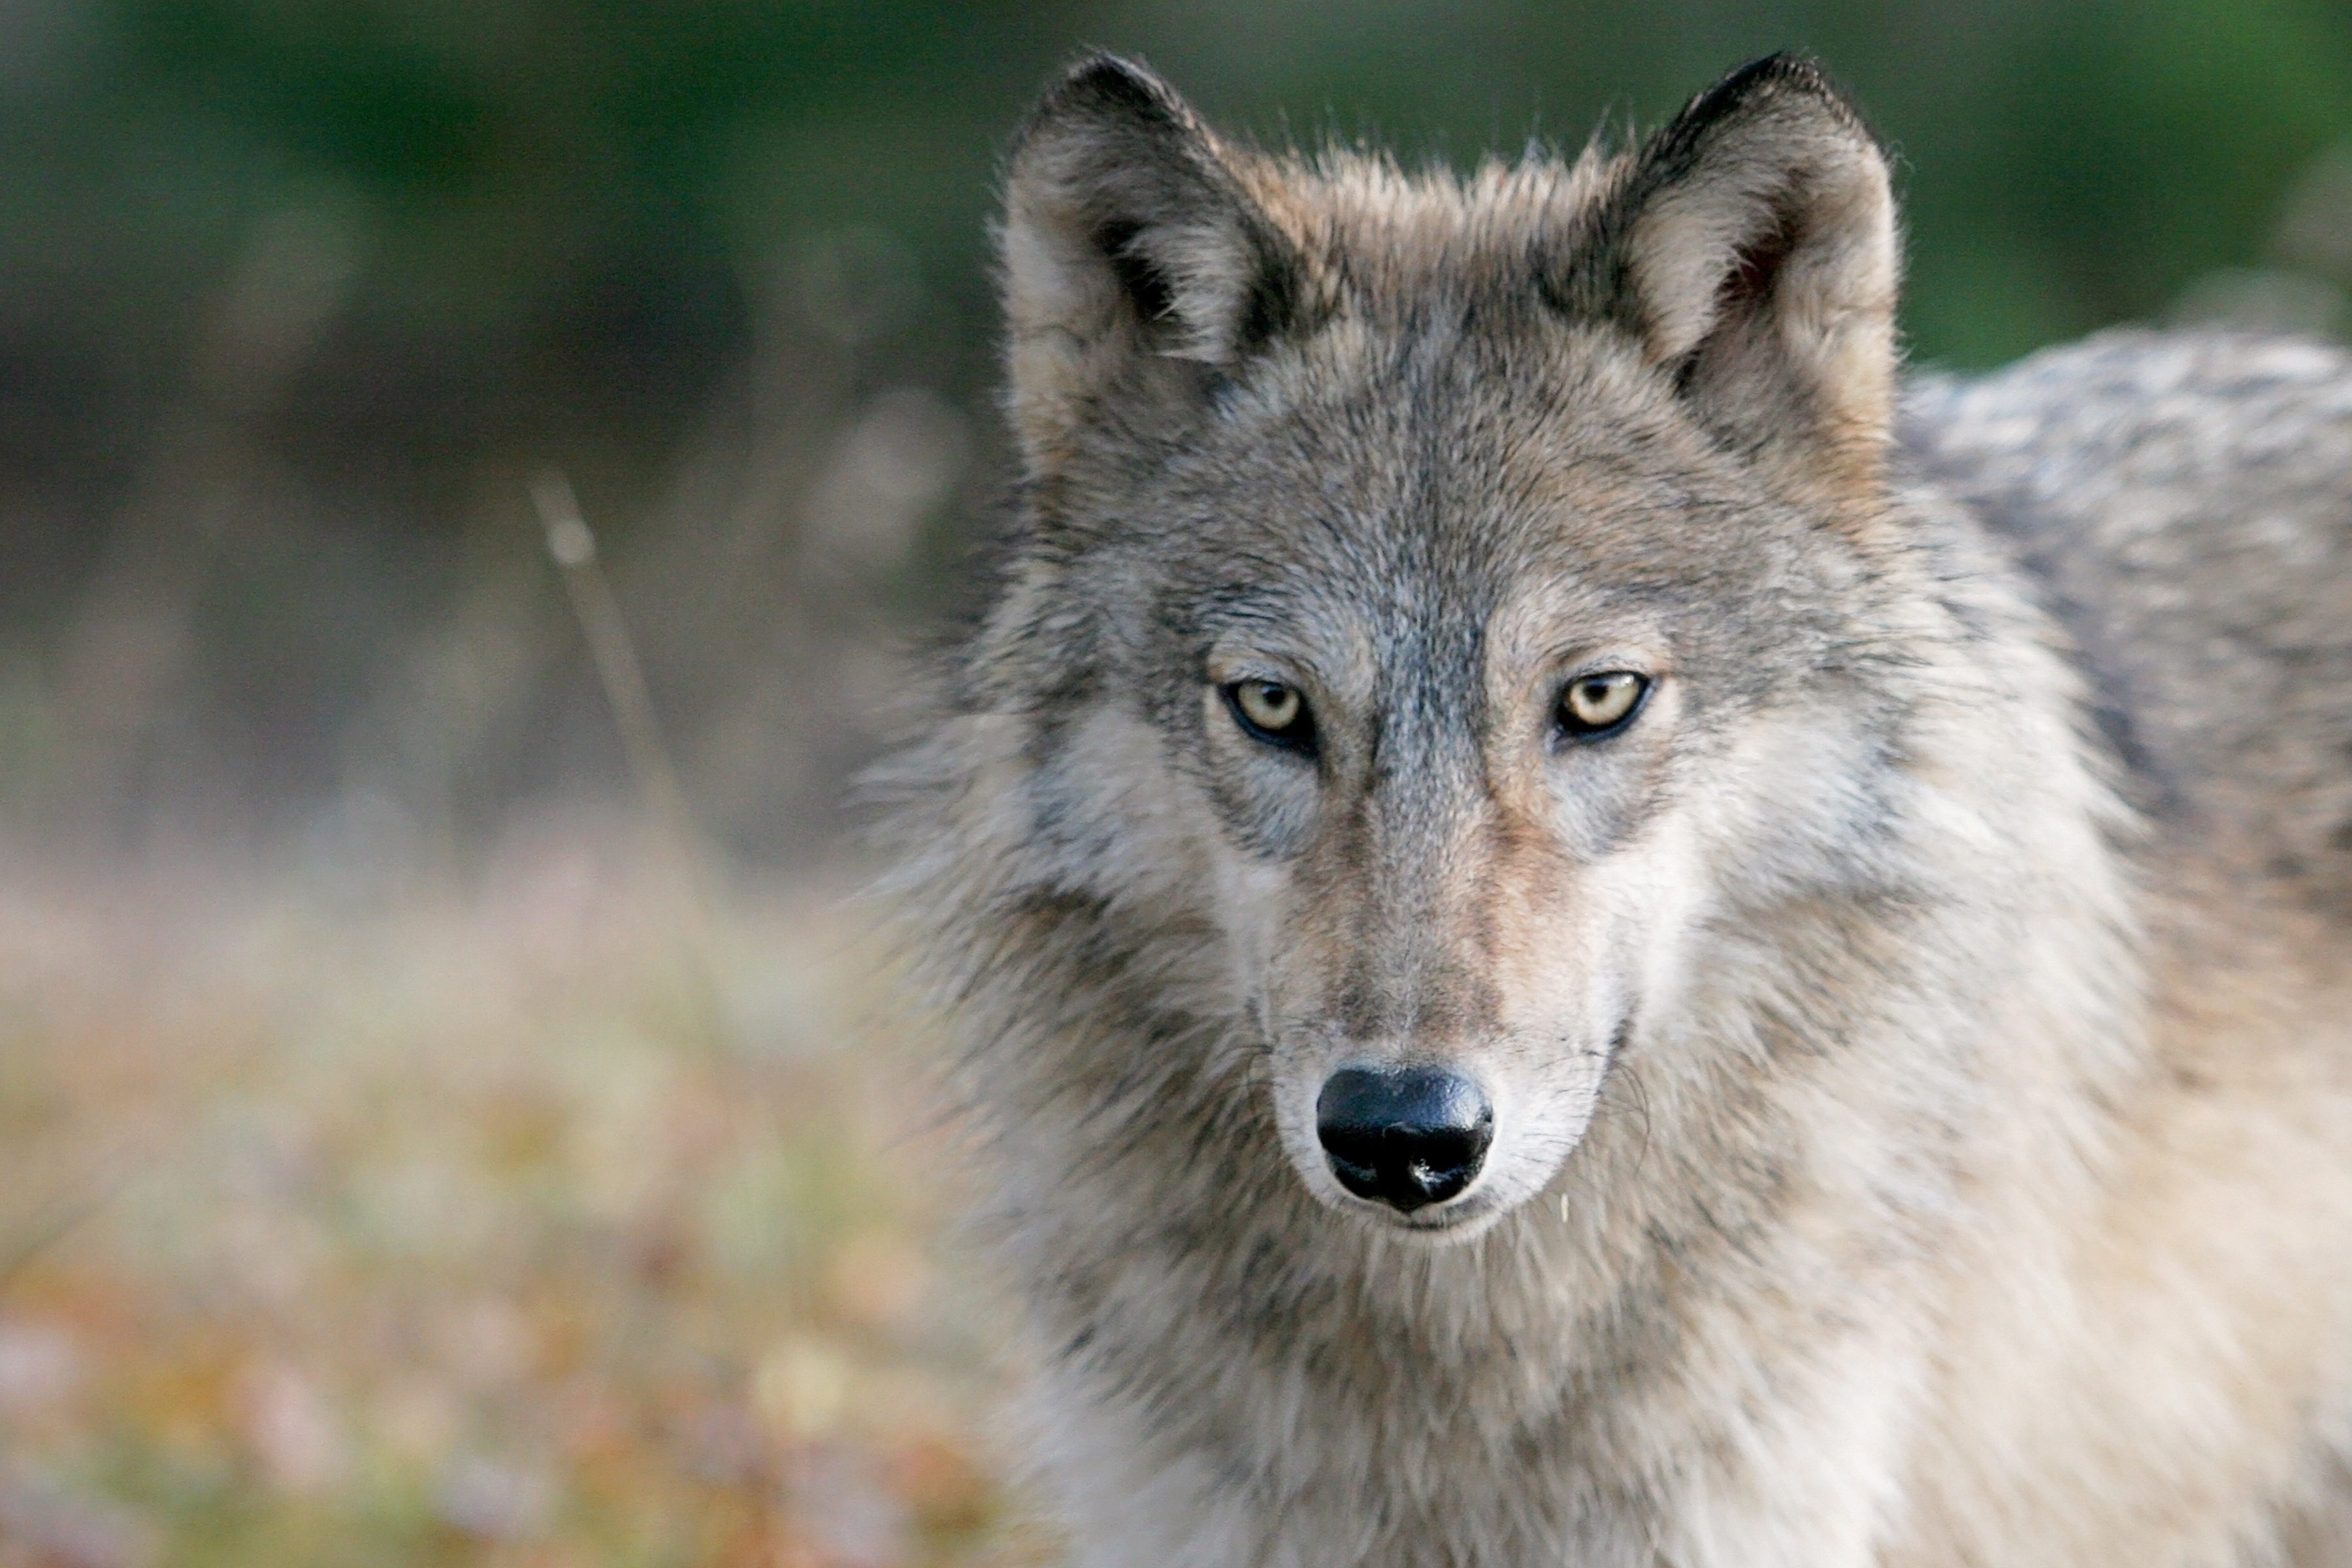 Minnesota Wolf Acting Strangely Towards People: 'Not Normal Behavior'